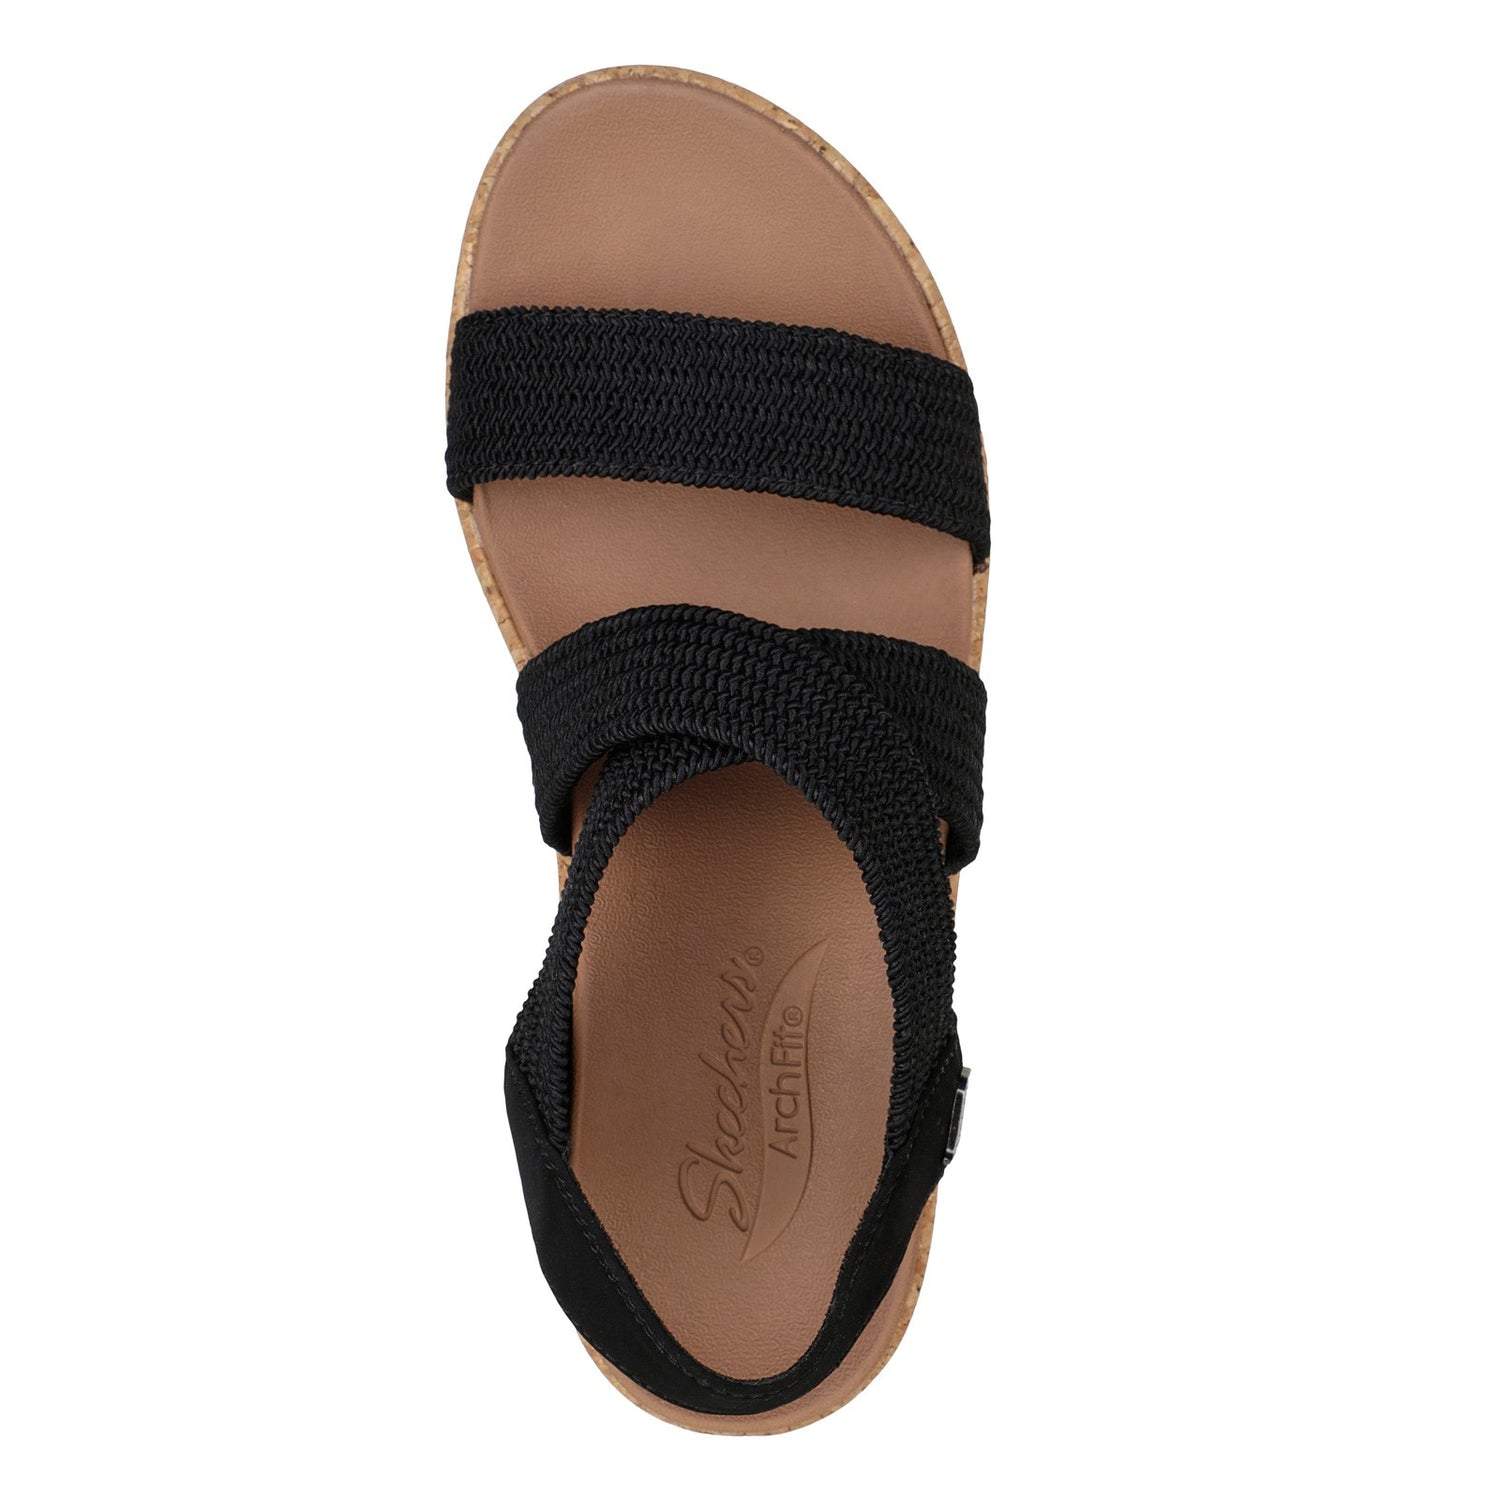 Peltz Shoes  Women's Skechers Arch Fit Beverlee - Love Stays Sandal Black 119260-BLK